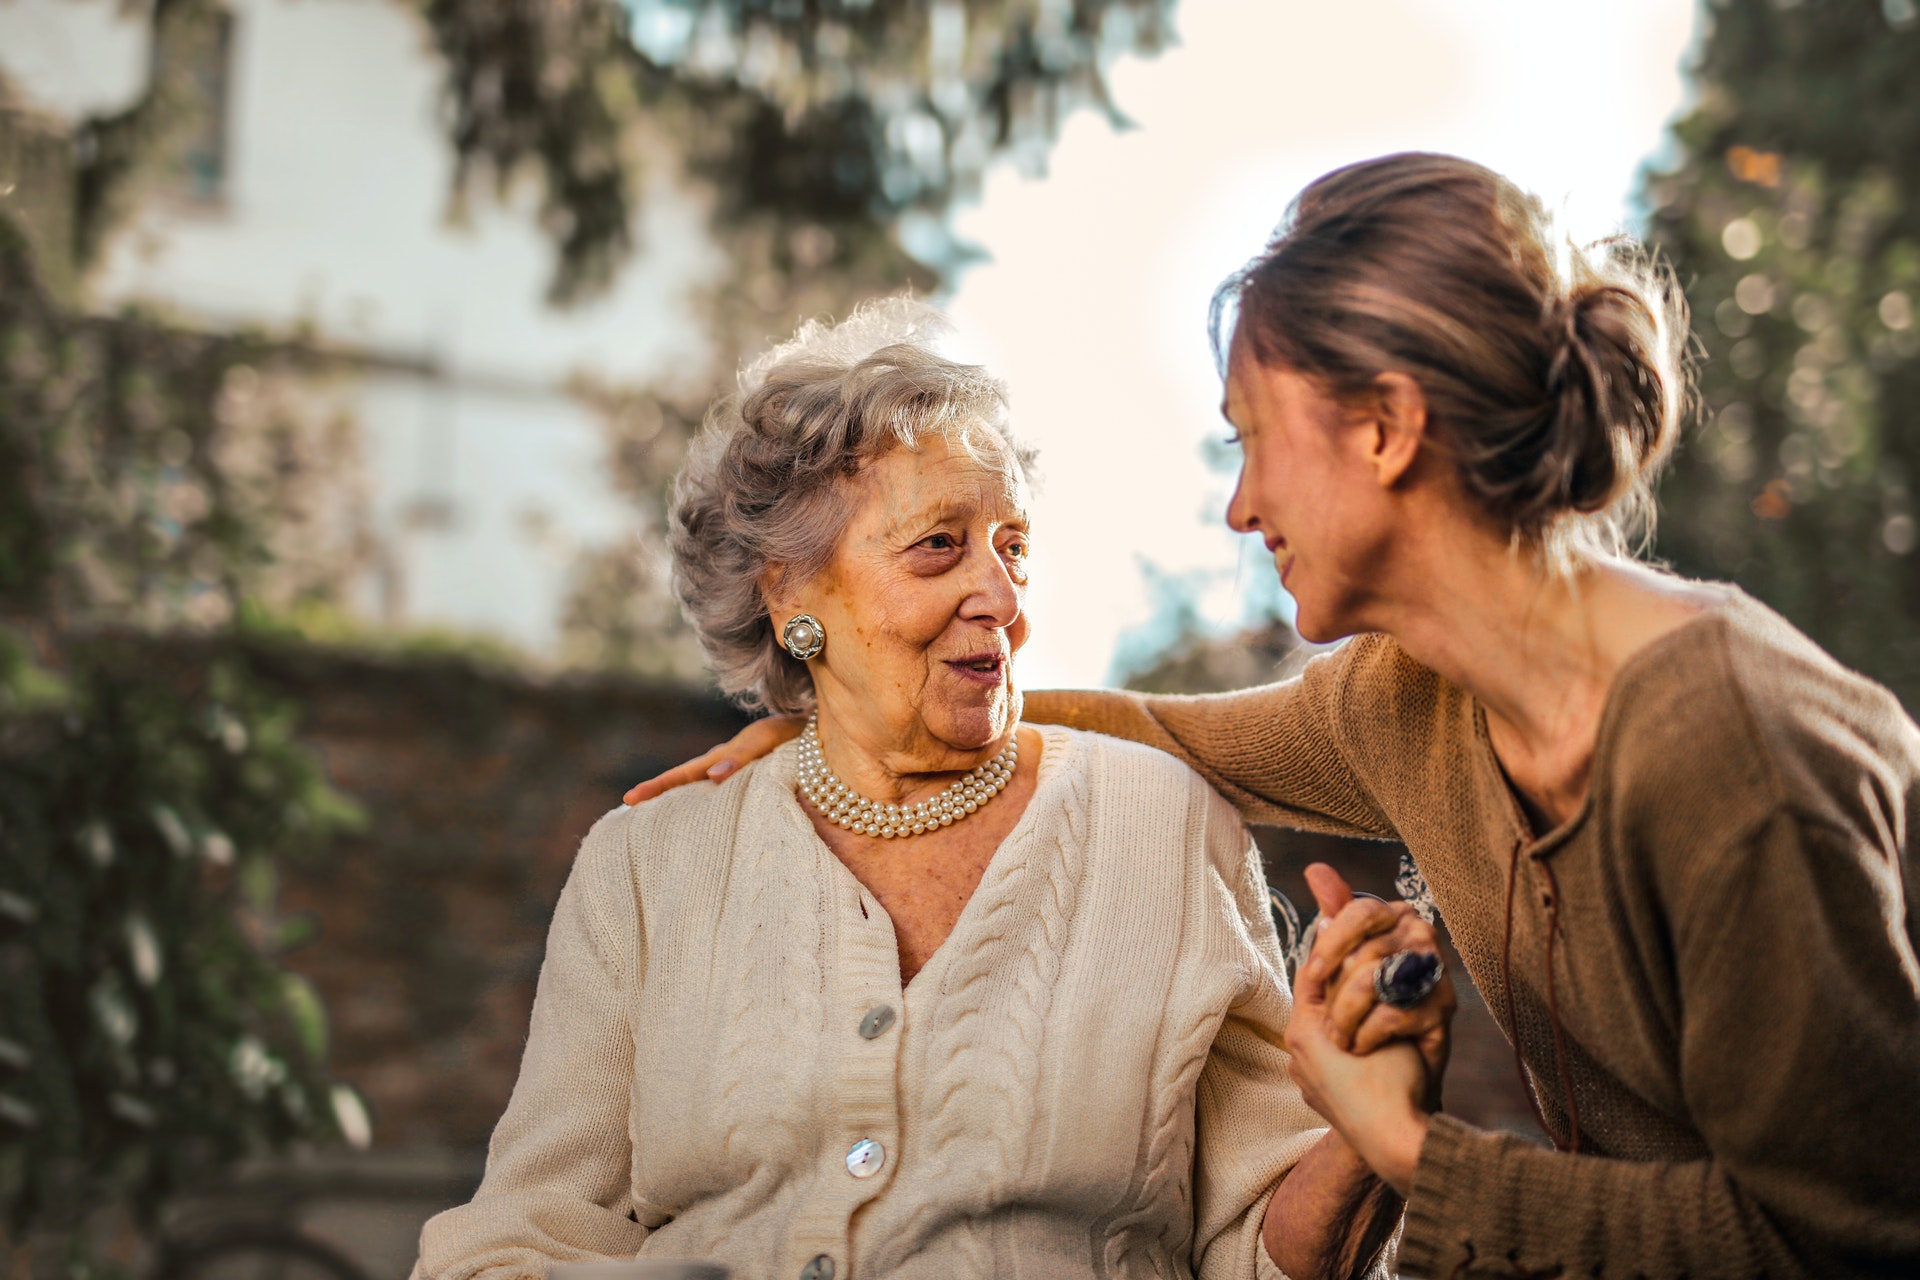 Tips When Hiring an Elder Care Agency